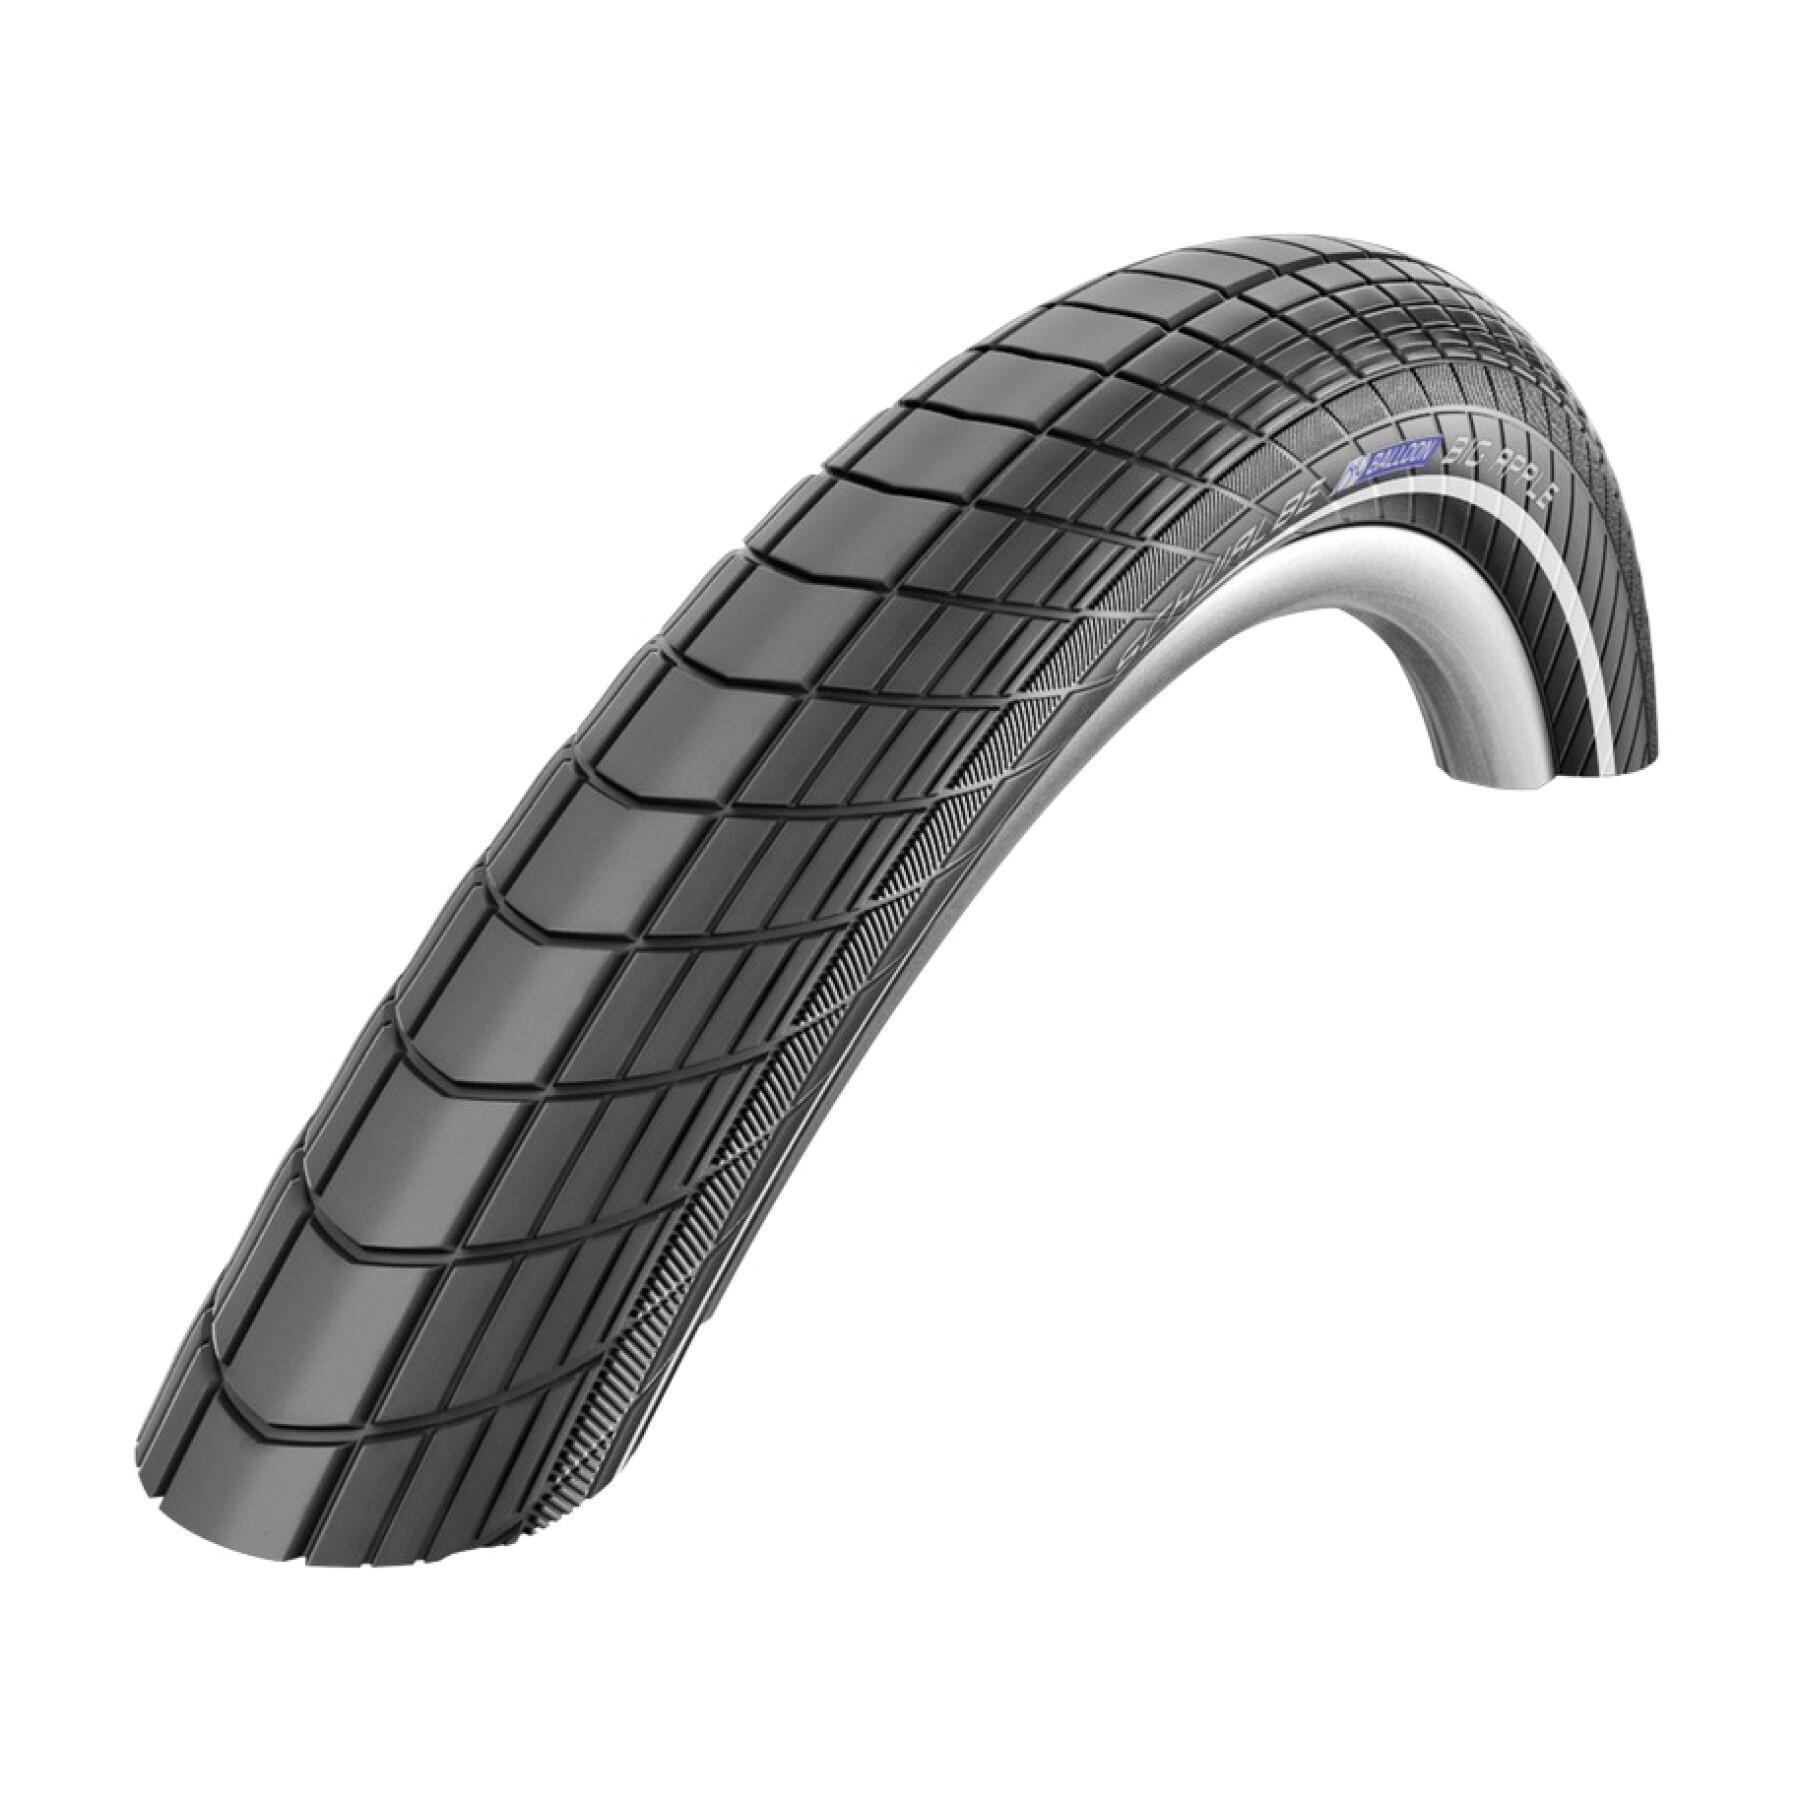 Rigid tire with reflective Schwalbe Big Apple Race-Guard HS430 Liteskin Rigide 50-622